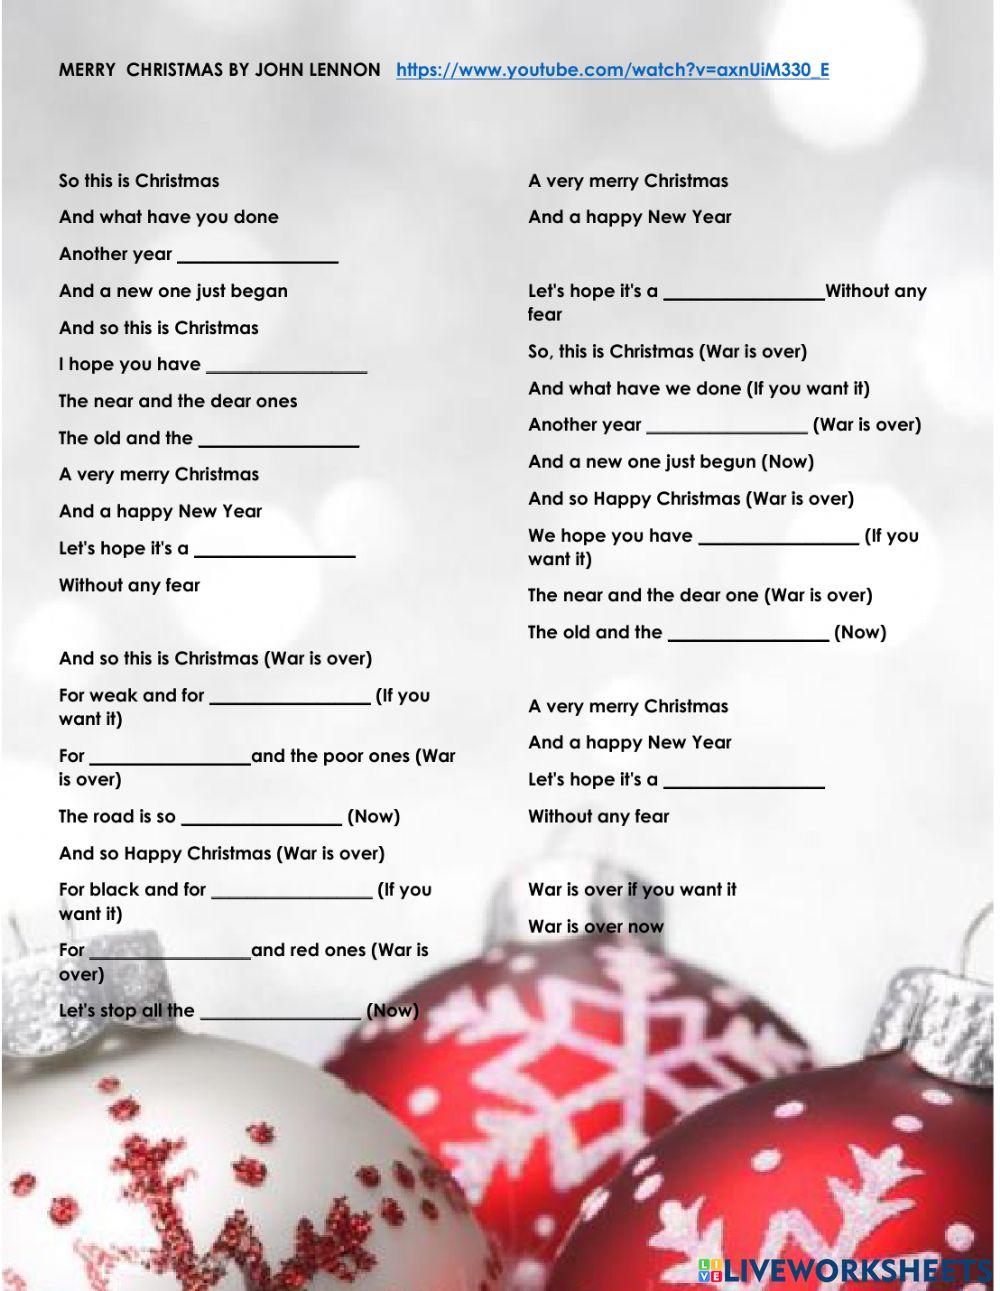 Song: Merry Christmas by John Lennon